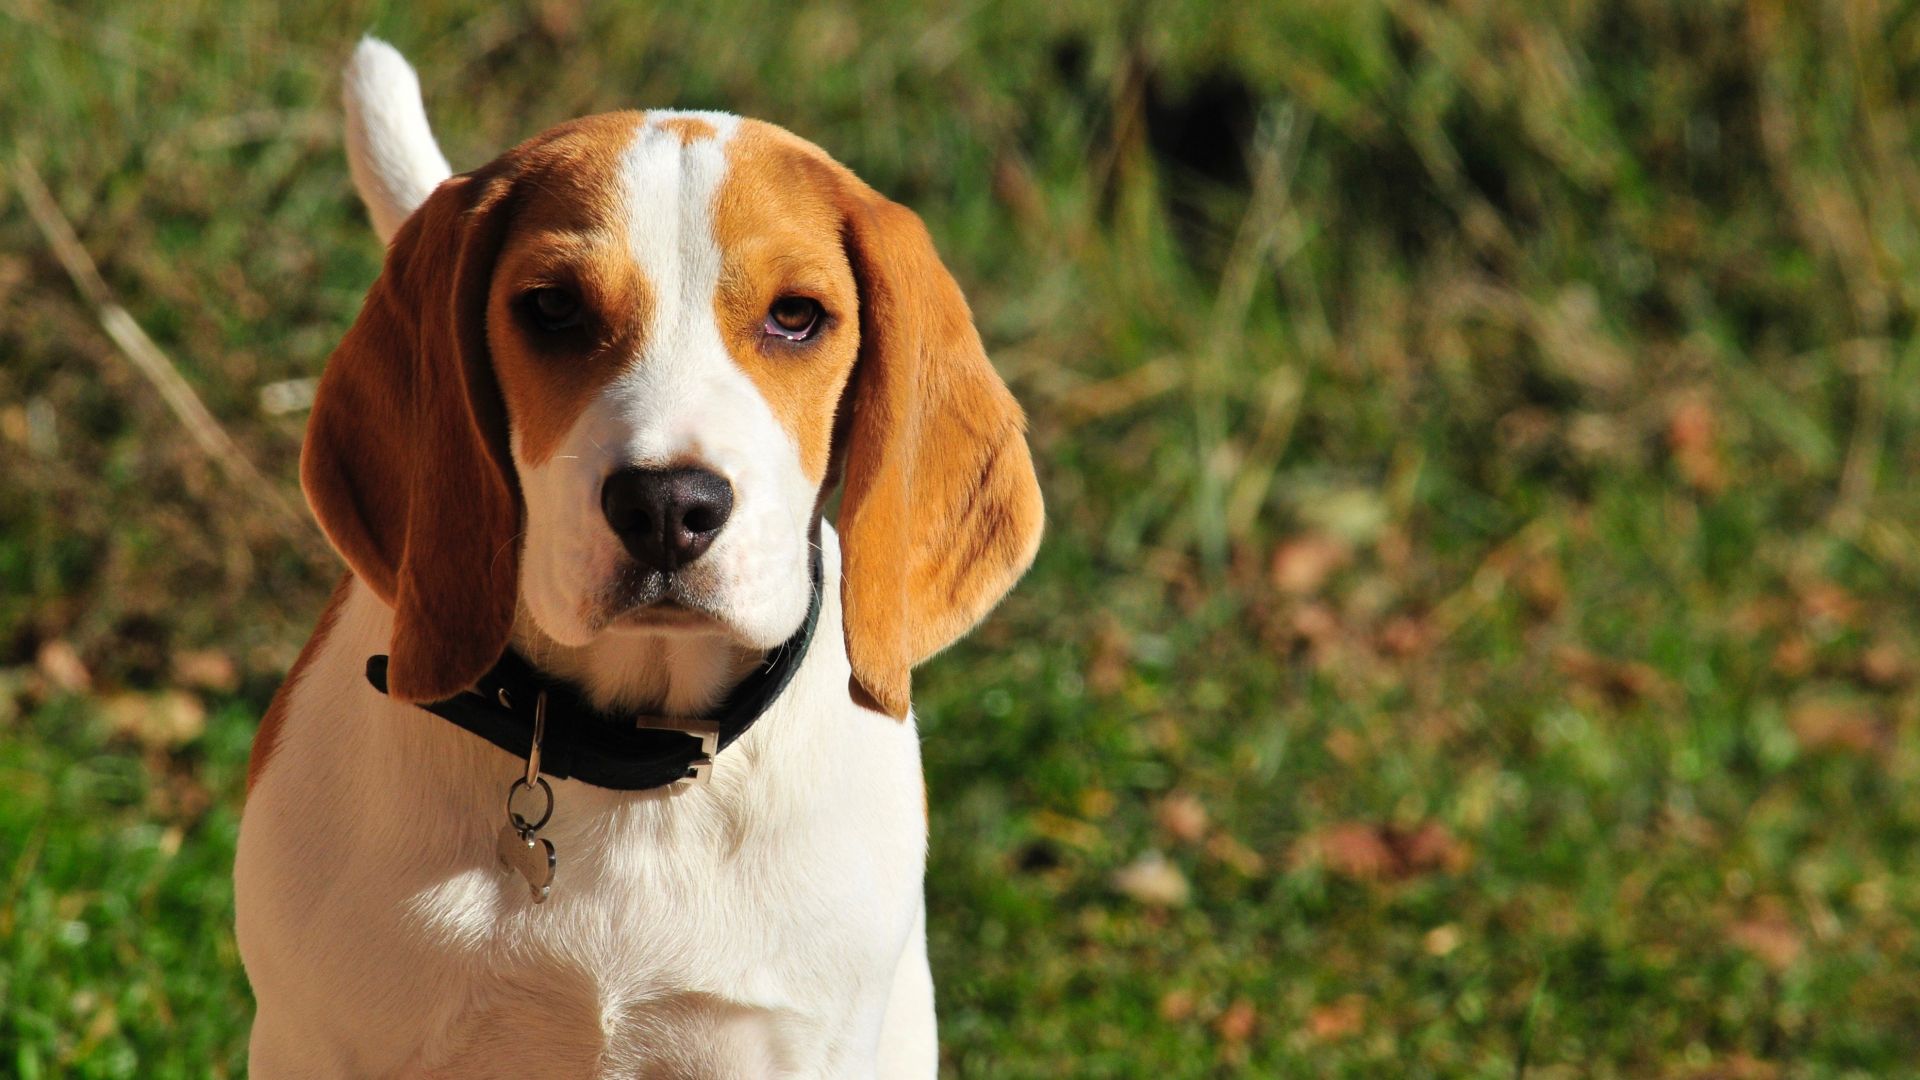 Wallpaper Beagle dog muzzle with collar